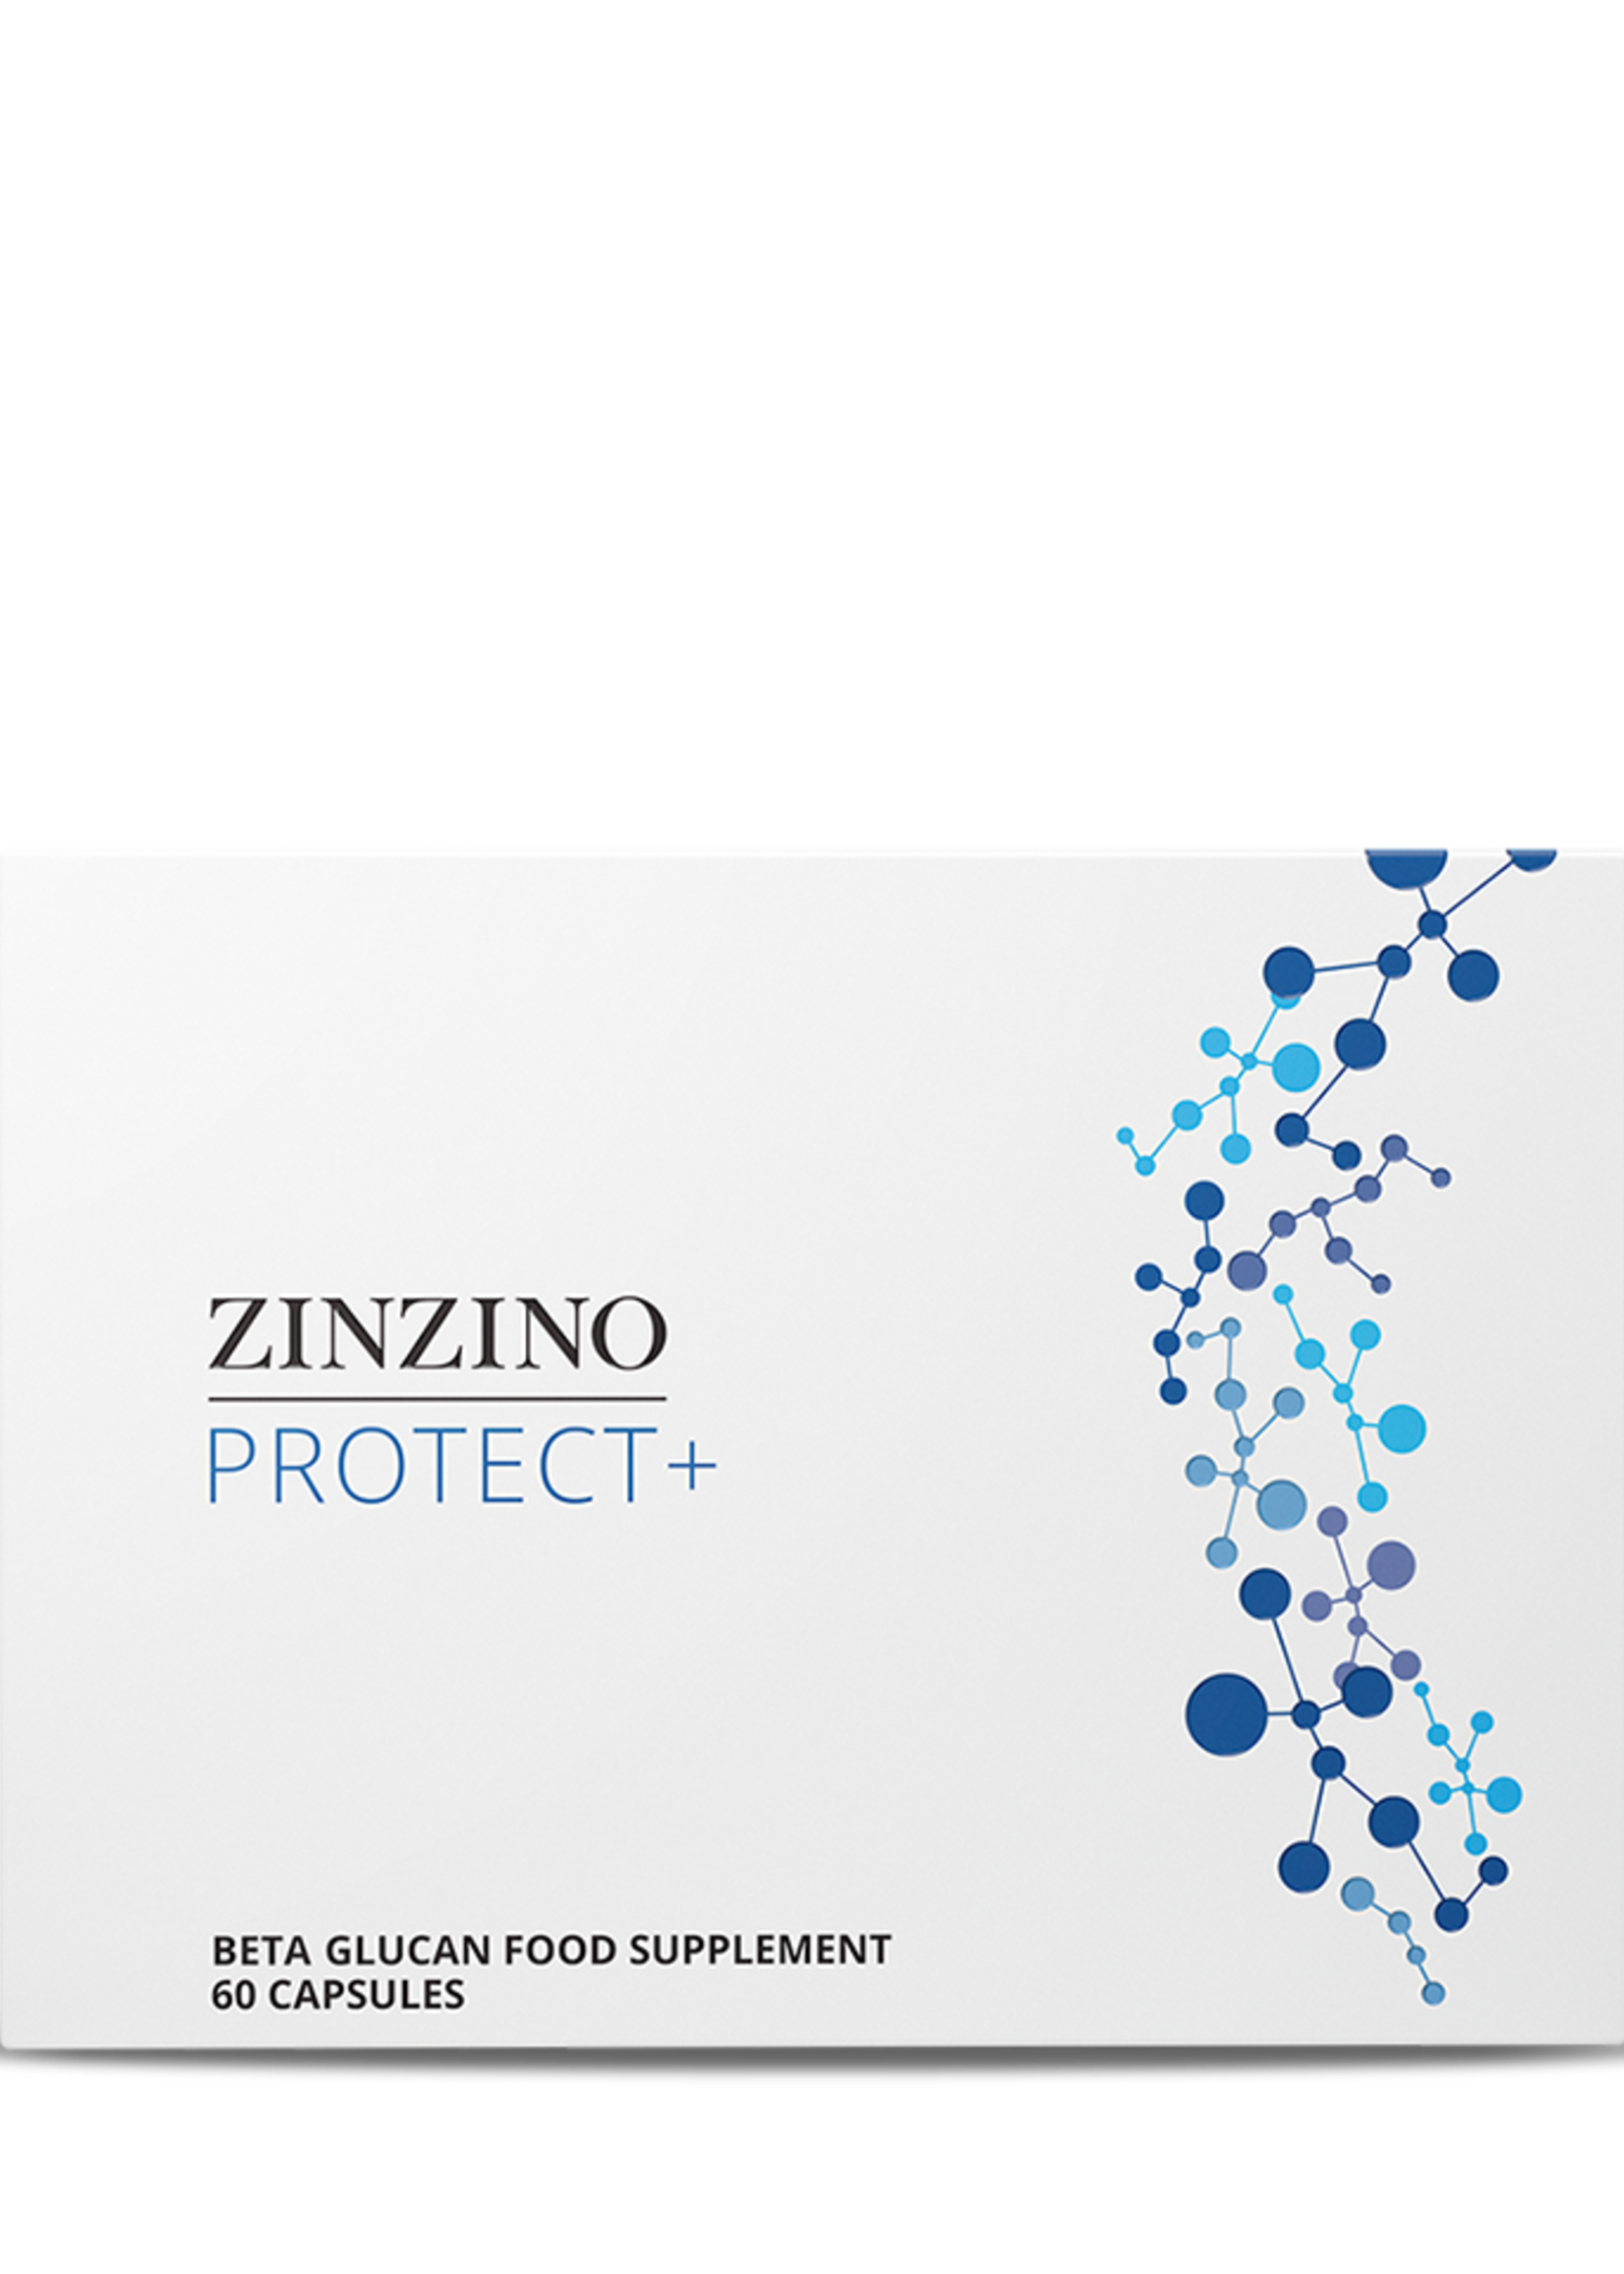 Zinzino Protect+